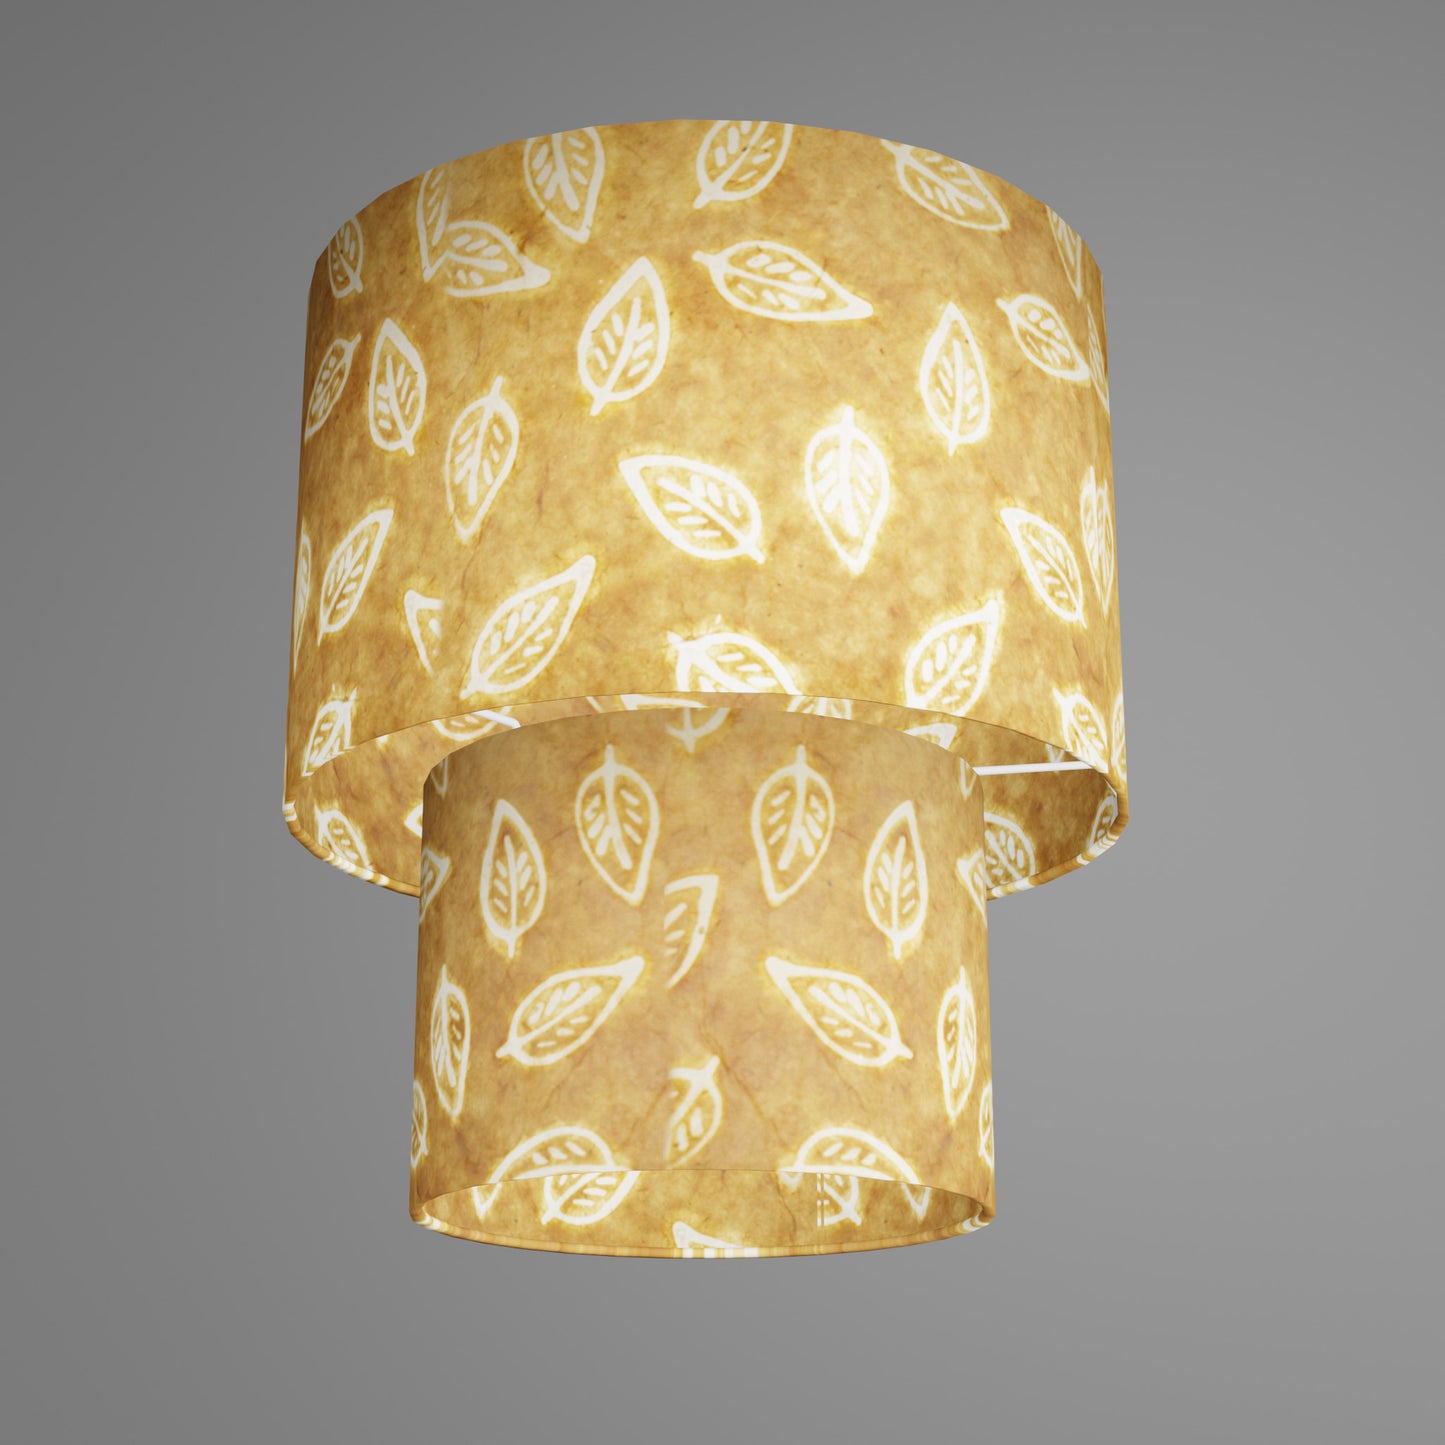 2 Tier Lamp Shade - P66 - Batik Leaf on Camel, 30cm x 20cm & 20cm x 15cm